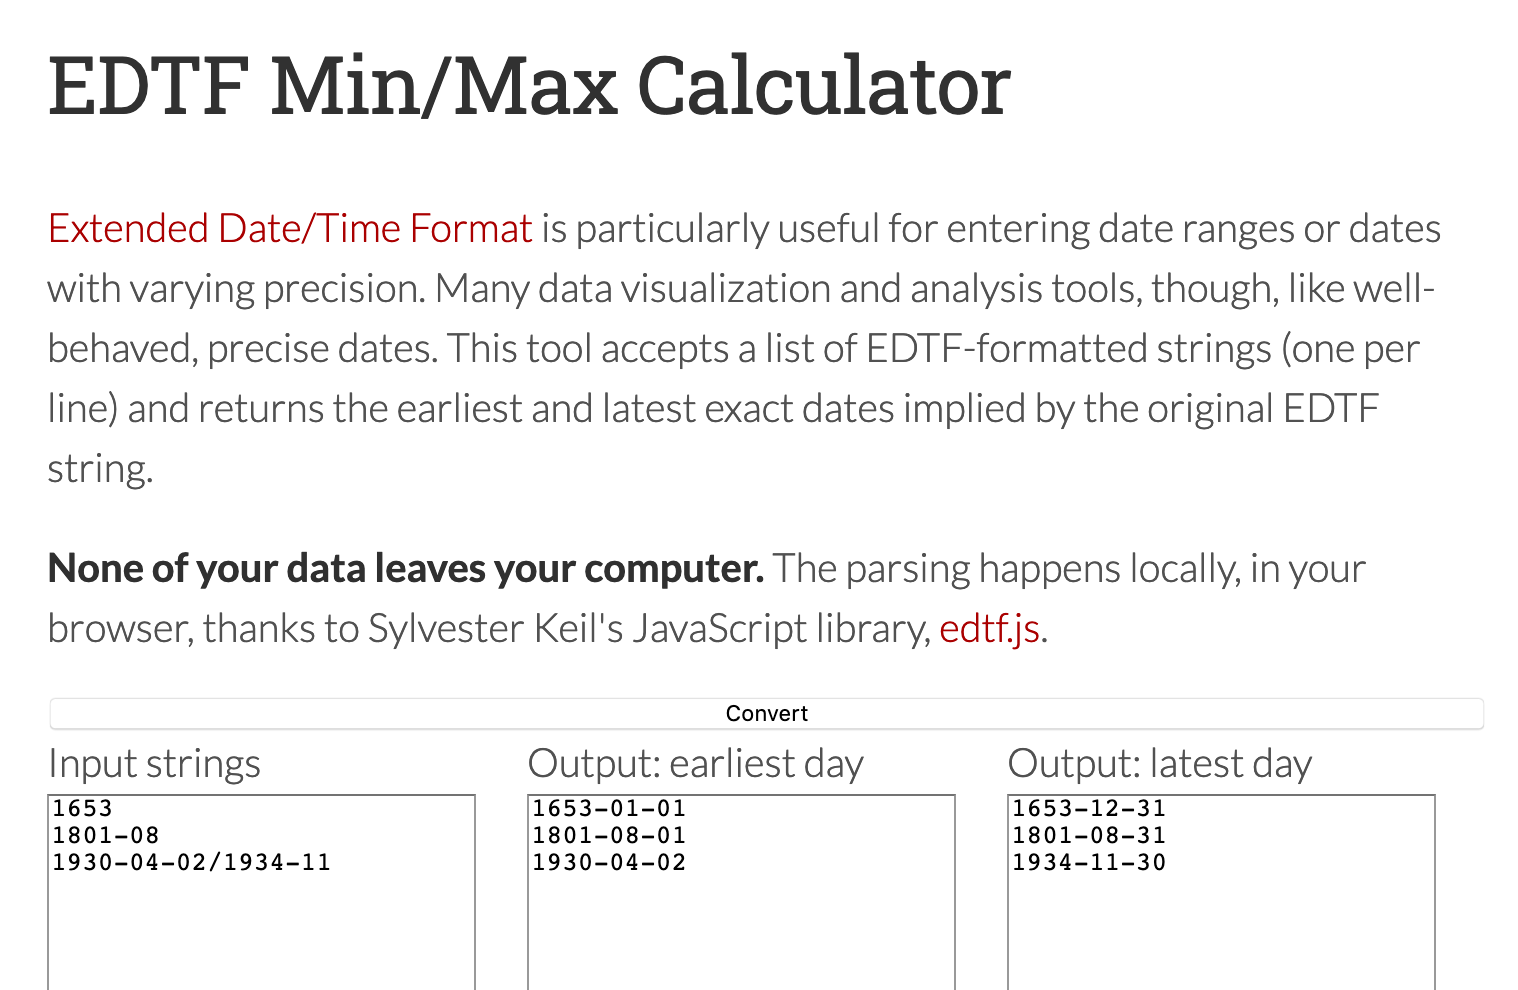 A screenshot of the EDTF min/max calculator